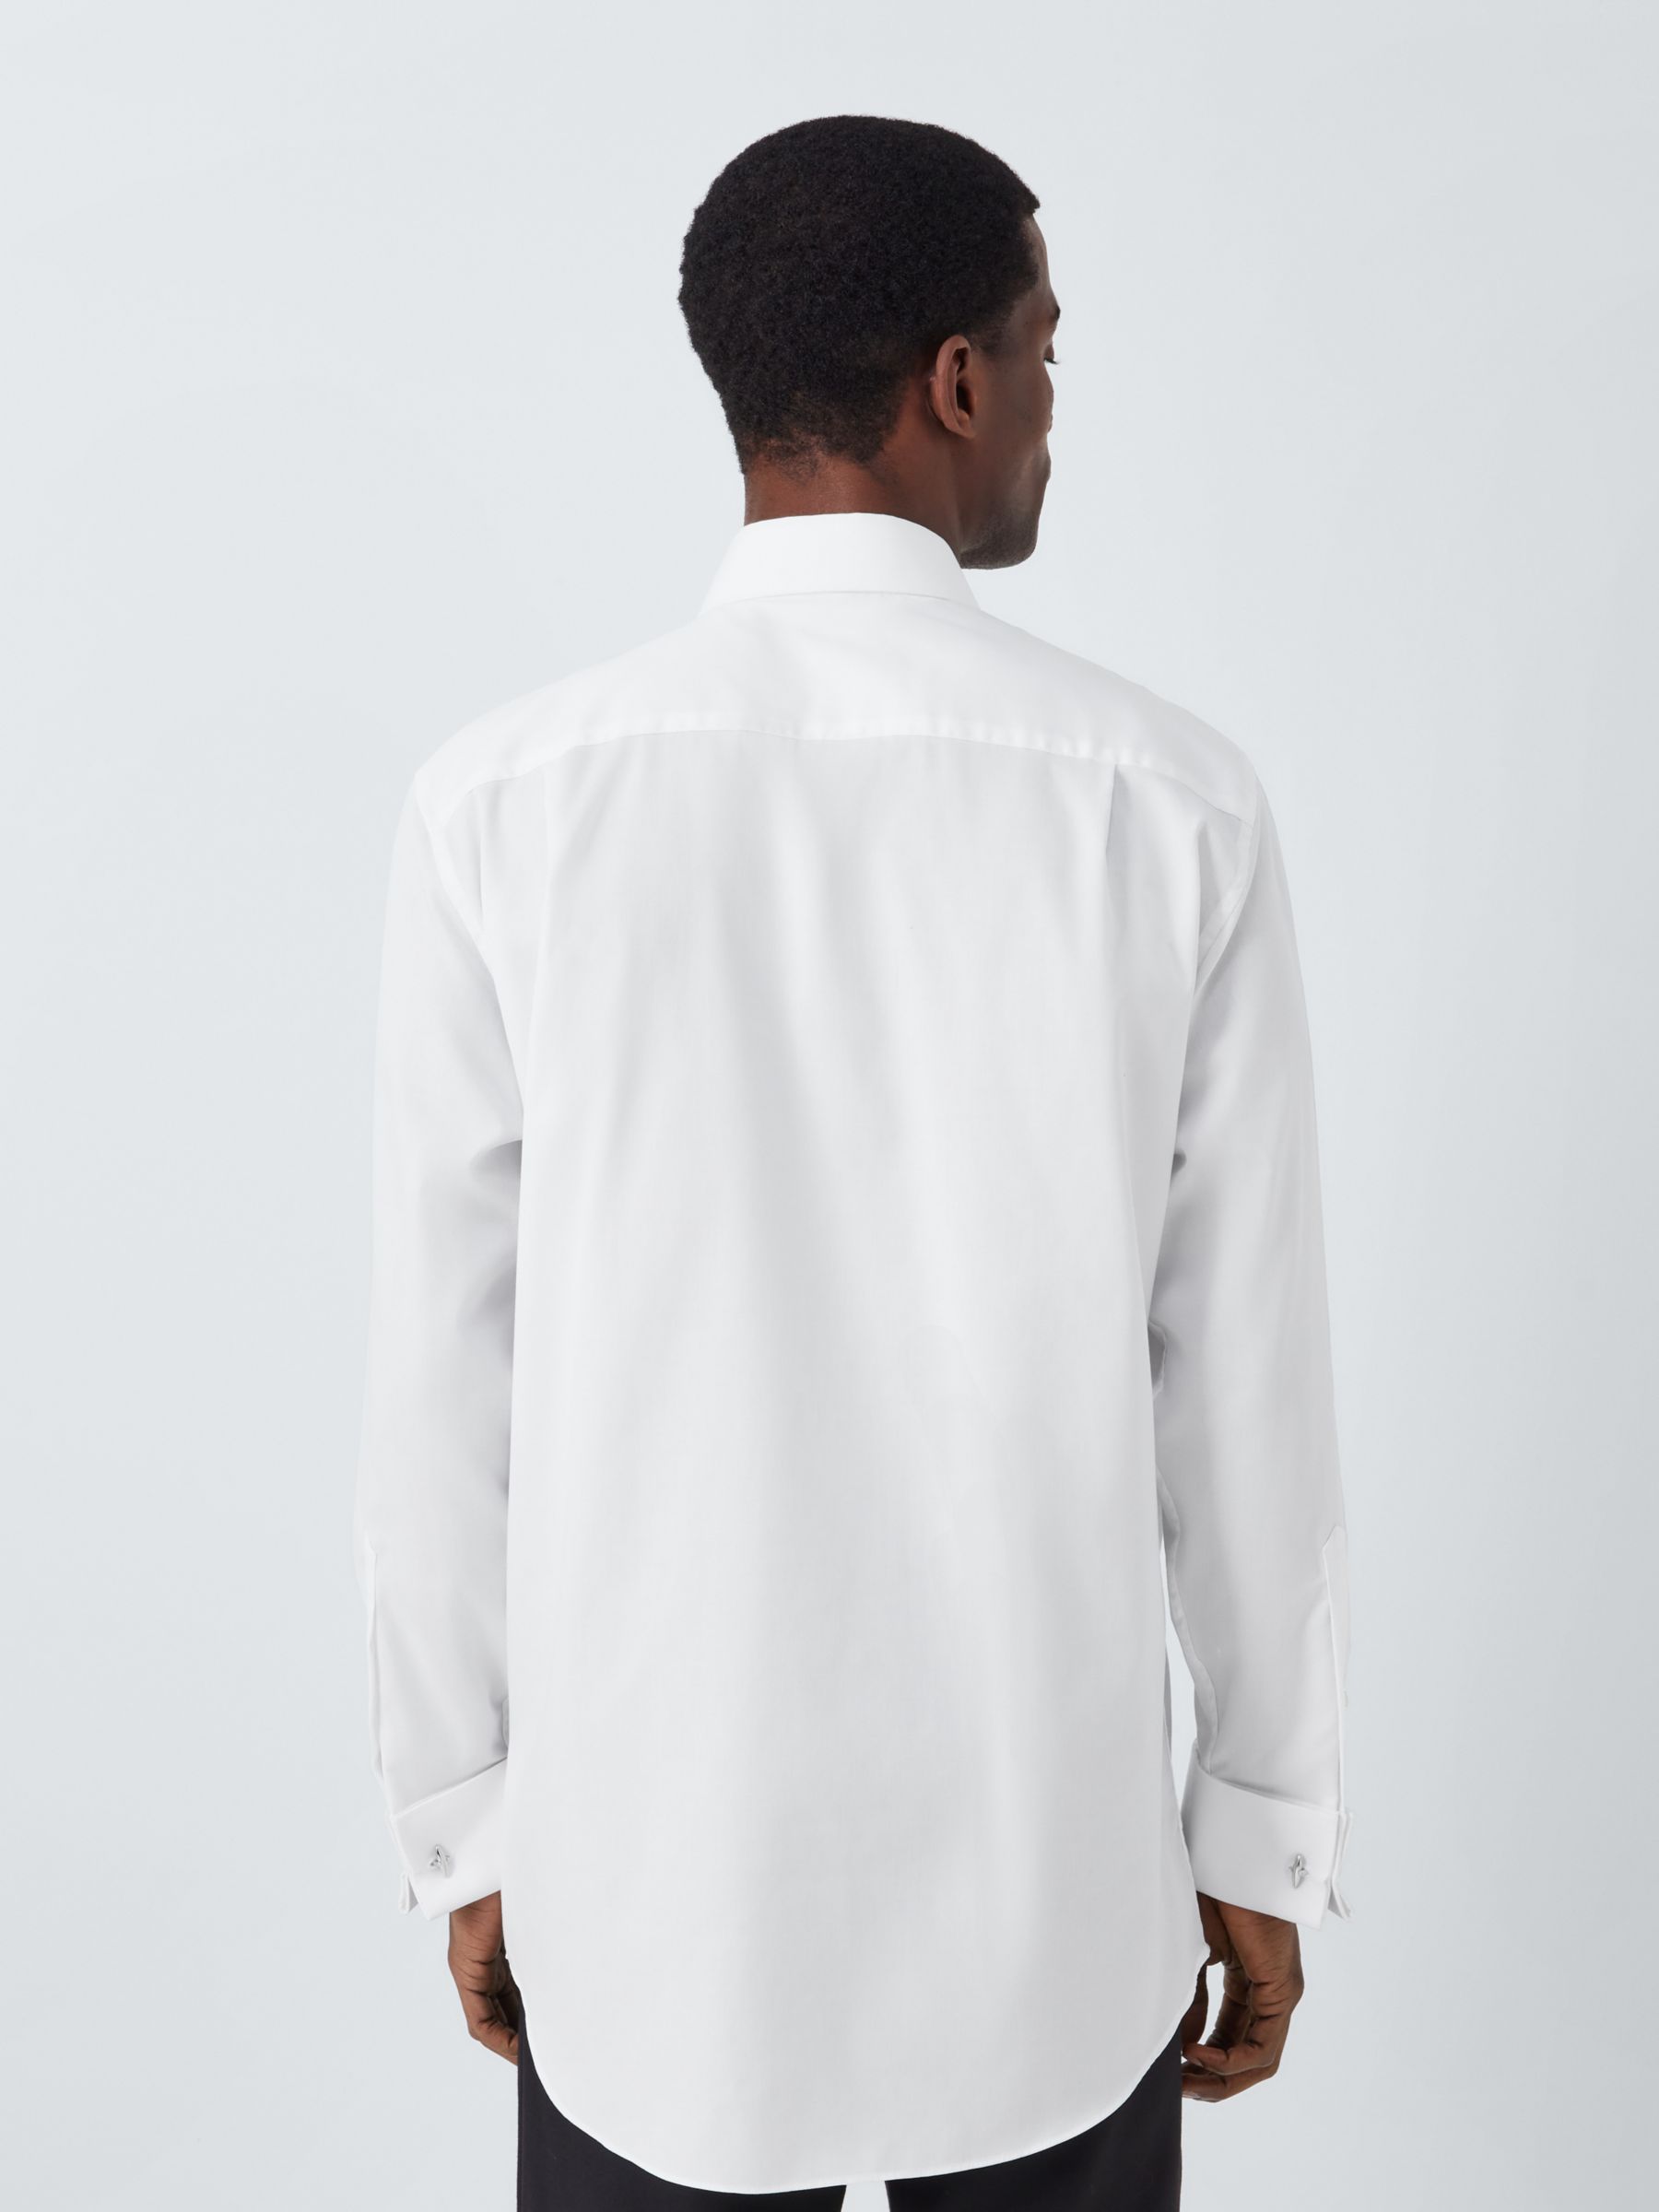 John Lewis Pleated Point Collar Regular Fit Dress Shirt, White, 15R